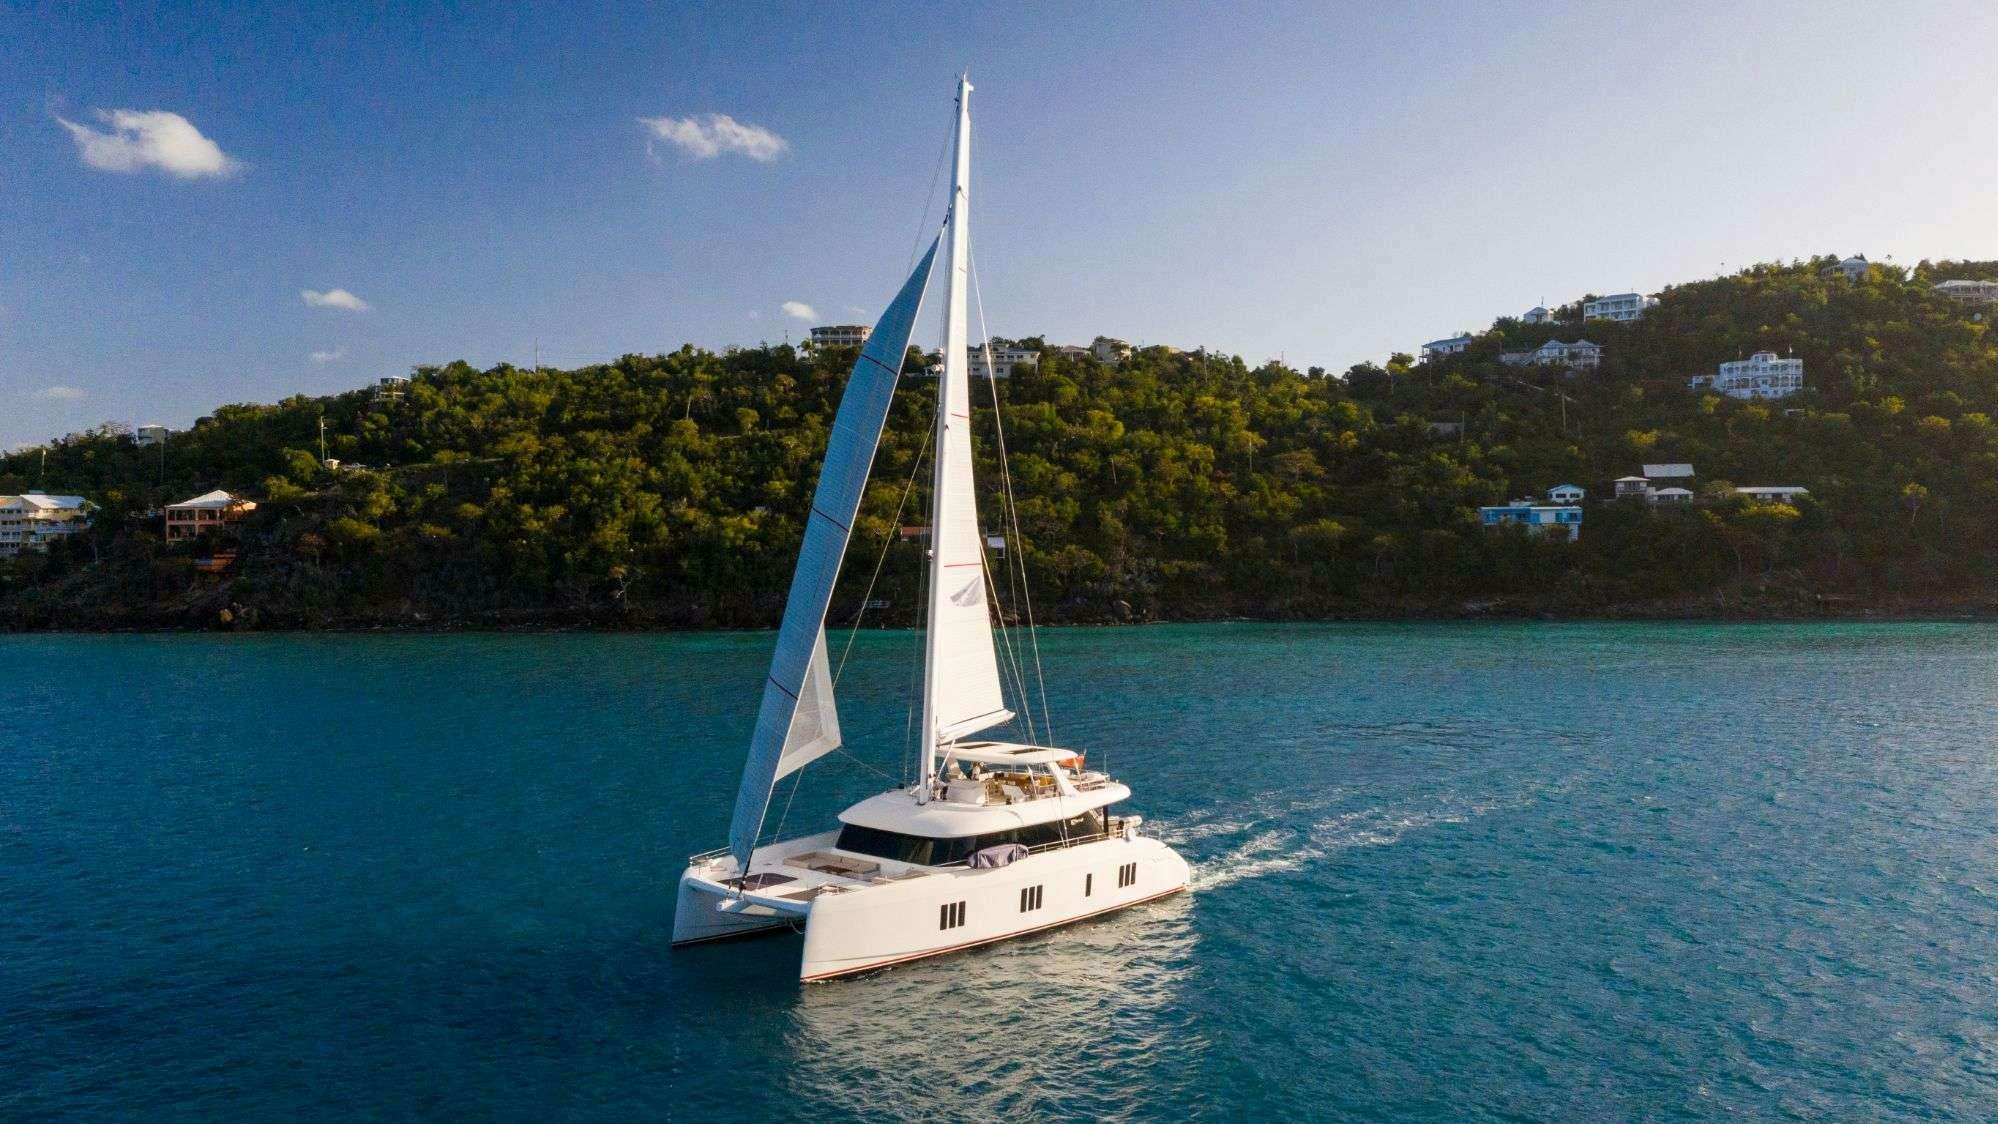 Watch Video for BUNDALONG Yacht for Charter